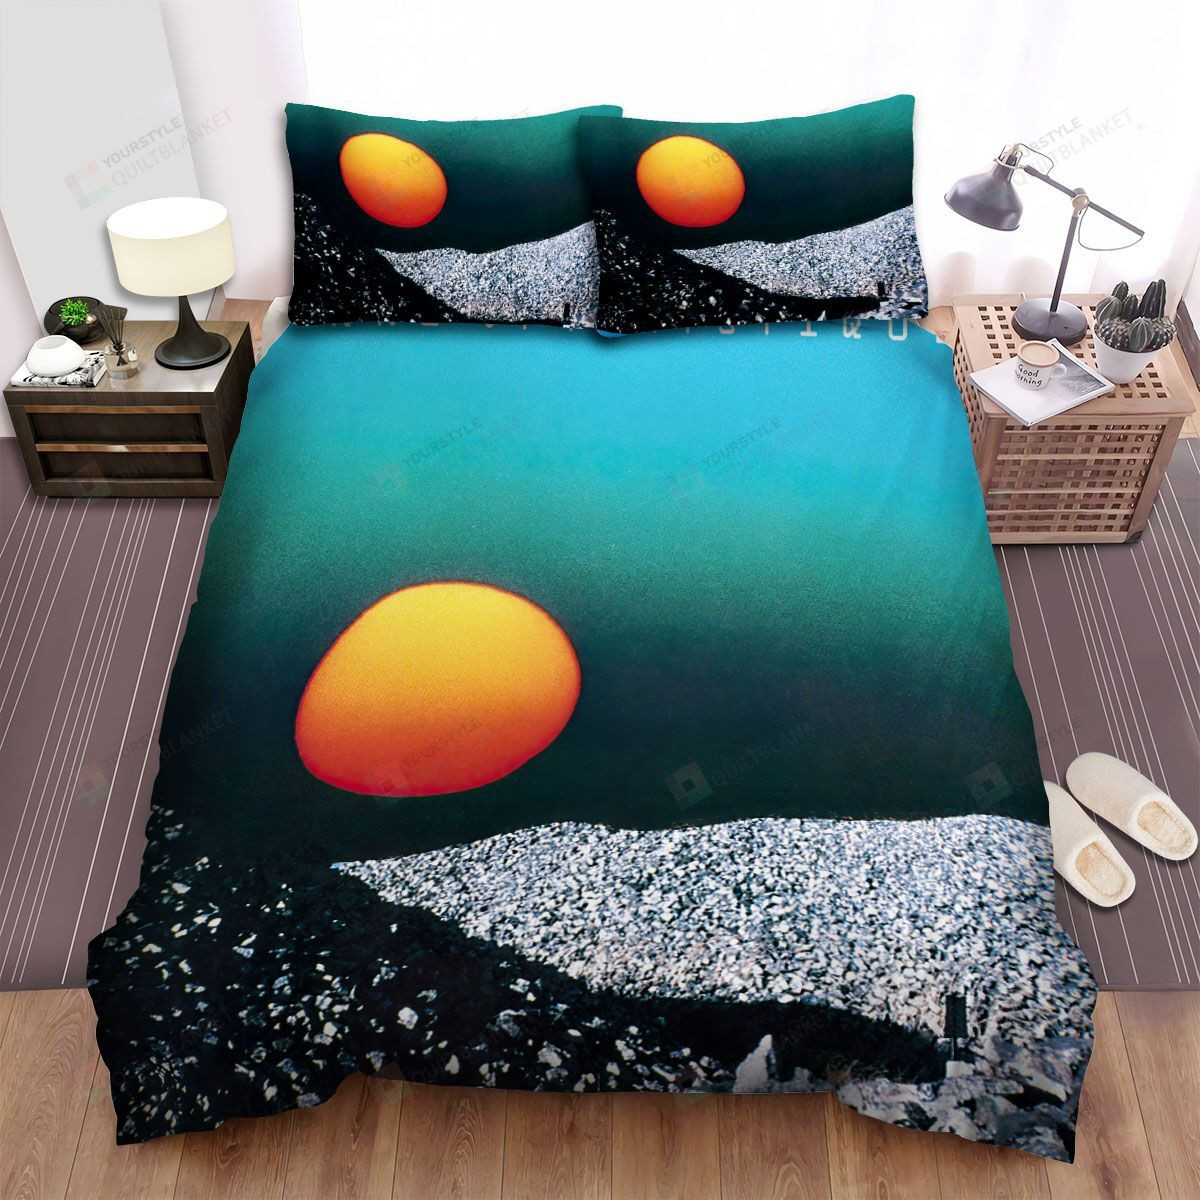 Yanni Optimystique Album Cover Bed Sheets Spread Comforter Duvet Cover Bedding Sets